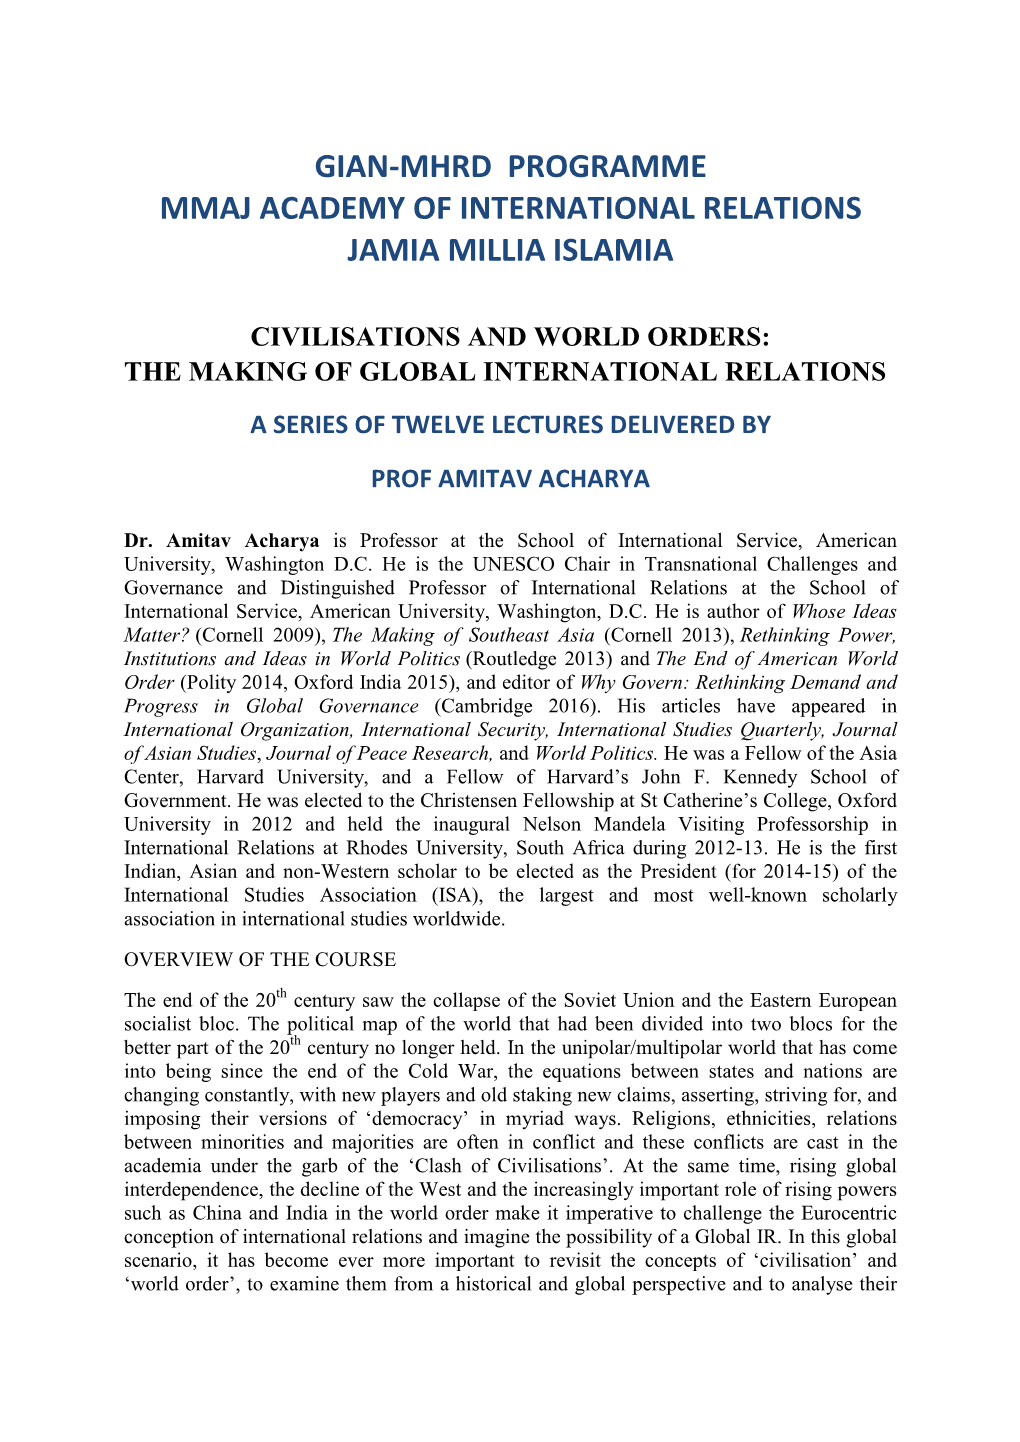 Gian-Mhrd Programme Mmaj Academy of International Relations Jamia Millia Islamia